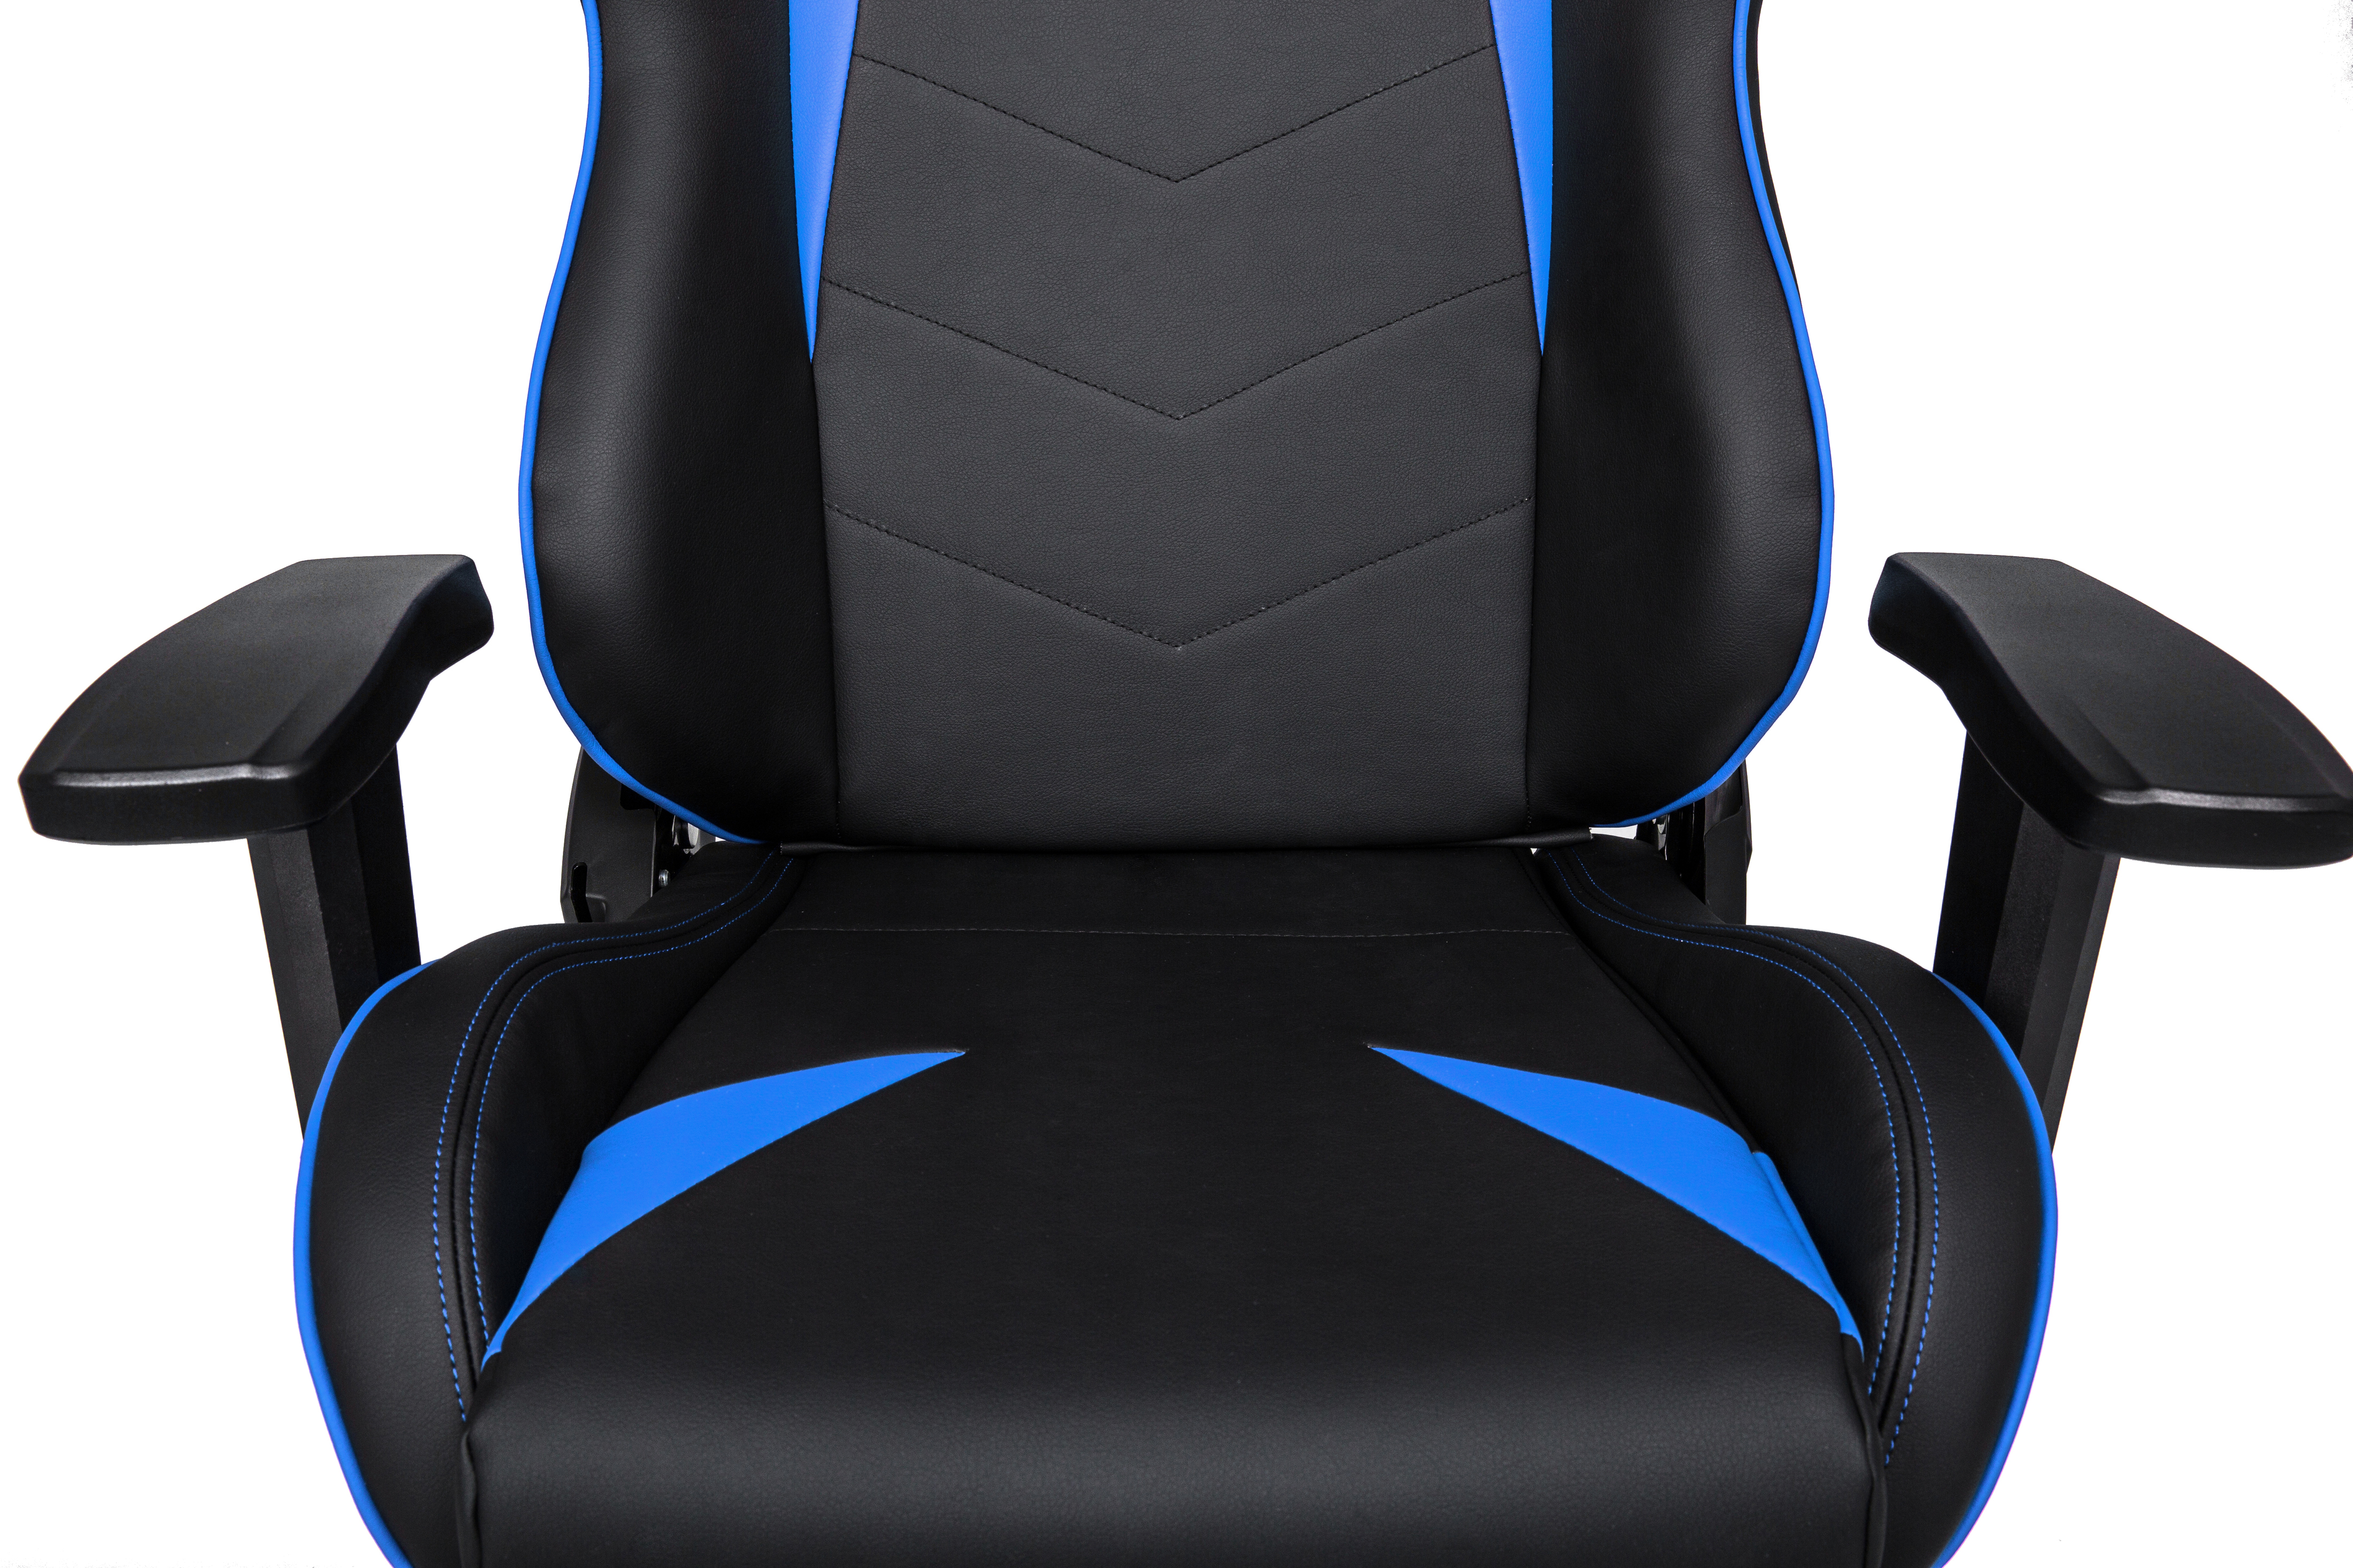 SX schwarz/blau Core Gamingstuhl, AKRACING Blue